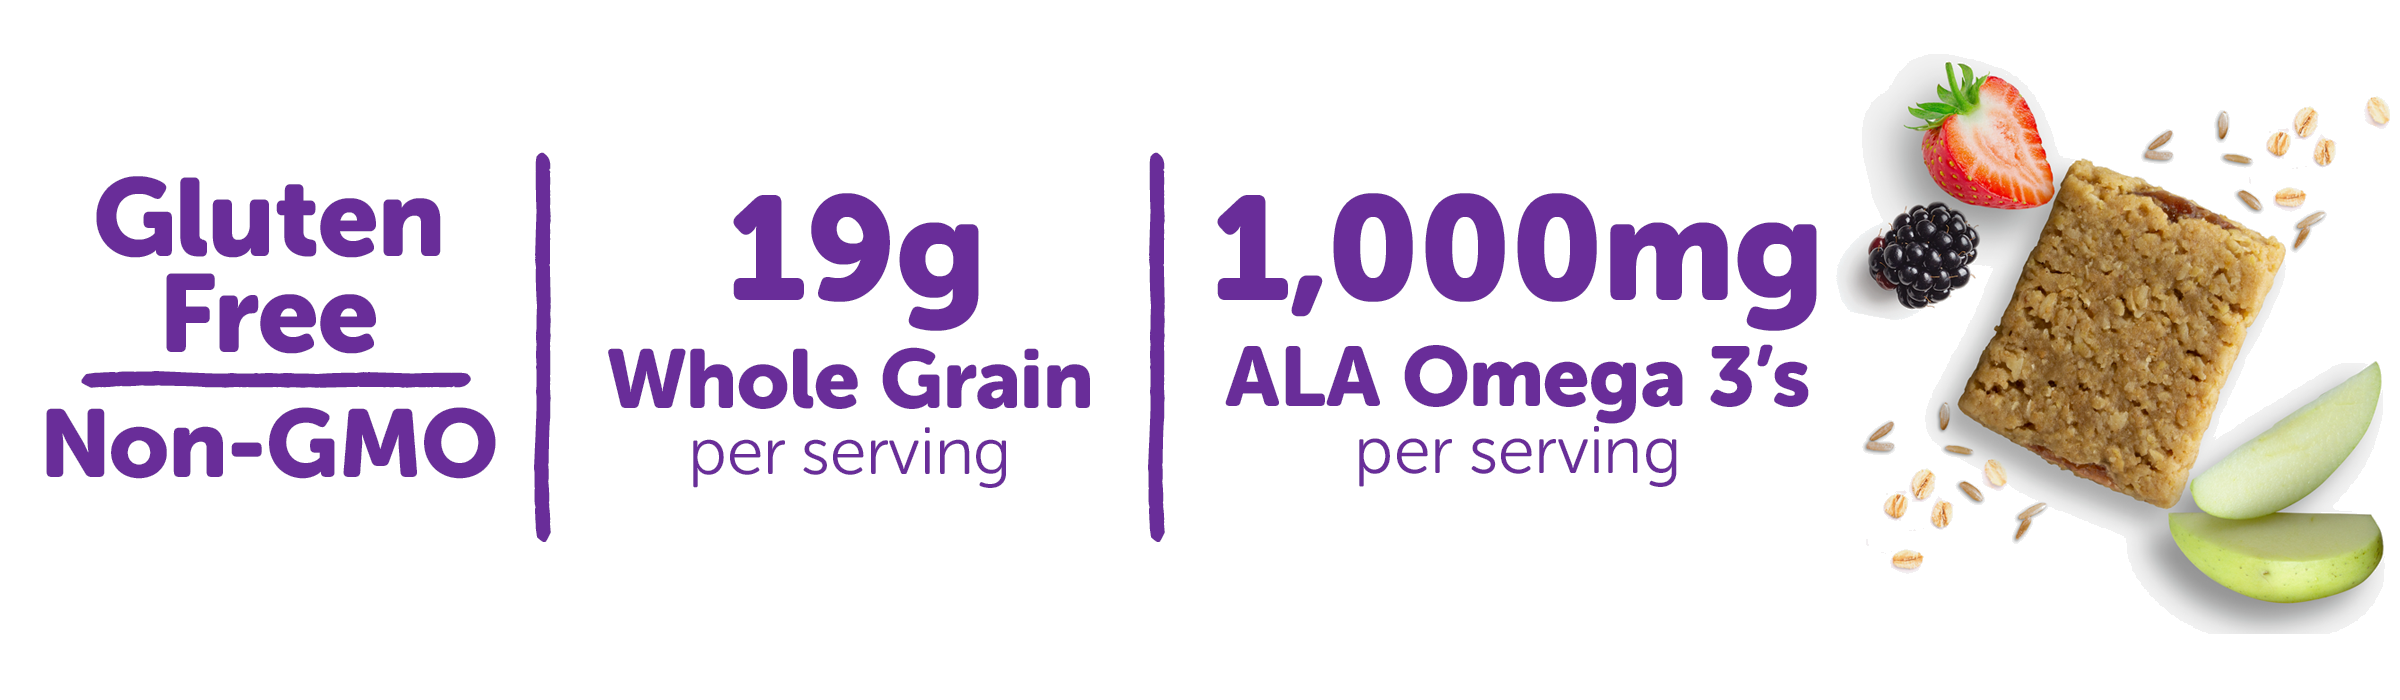 Gluten Free / 19g Whole Grain per serving / 1,000mg ALA Omega 3's per serving